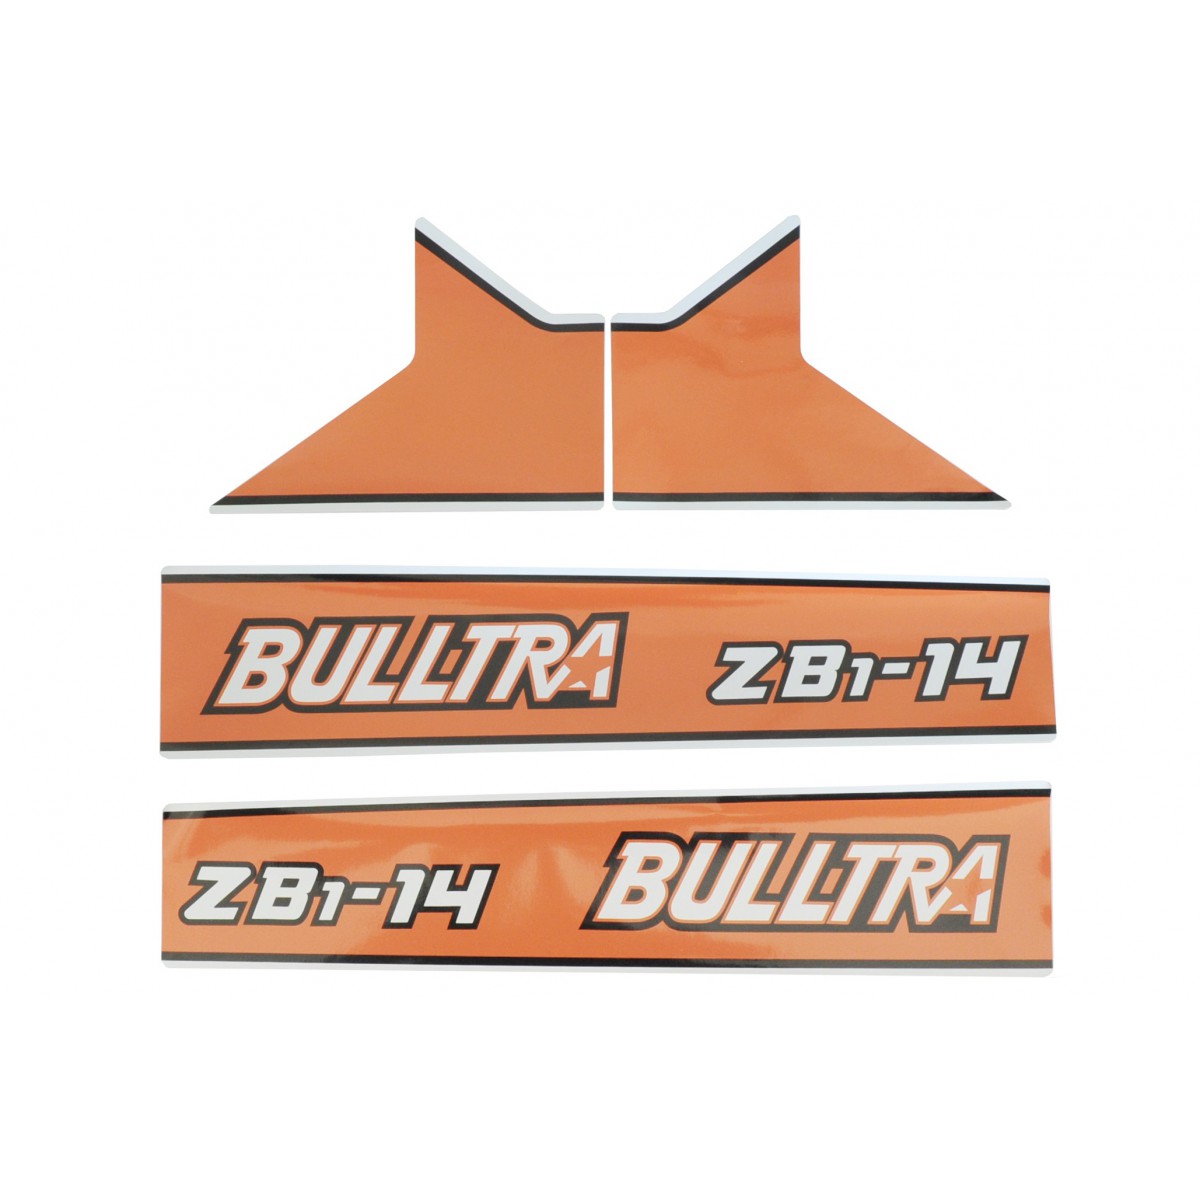 Naklejki Kubota Bulltra B1-14, ZB1-14